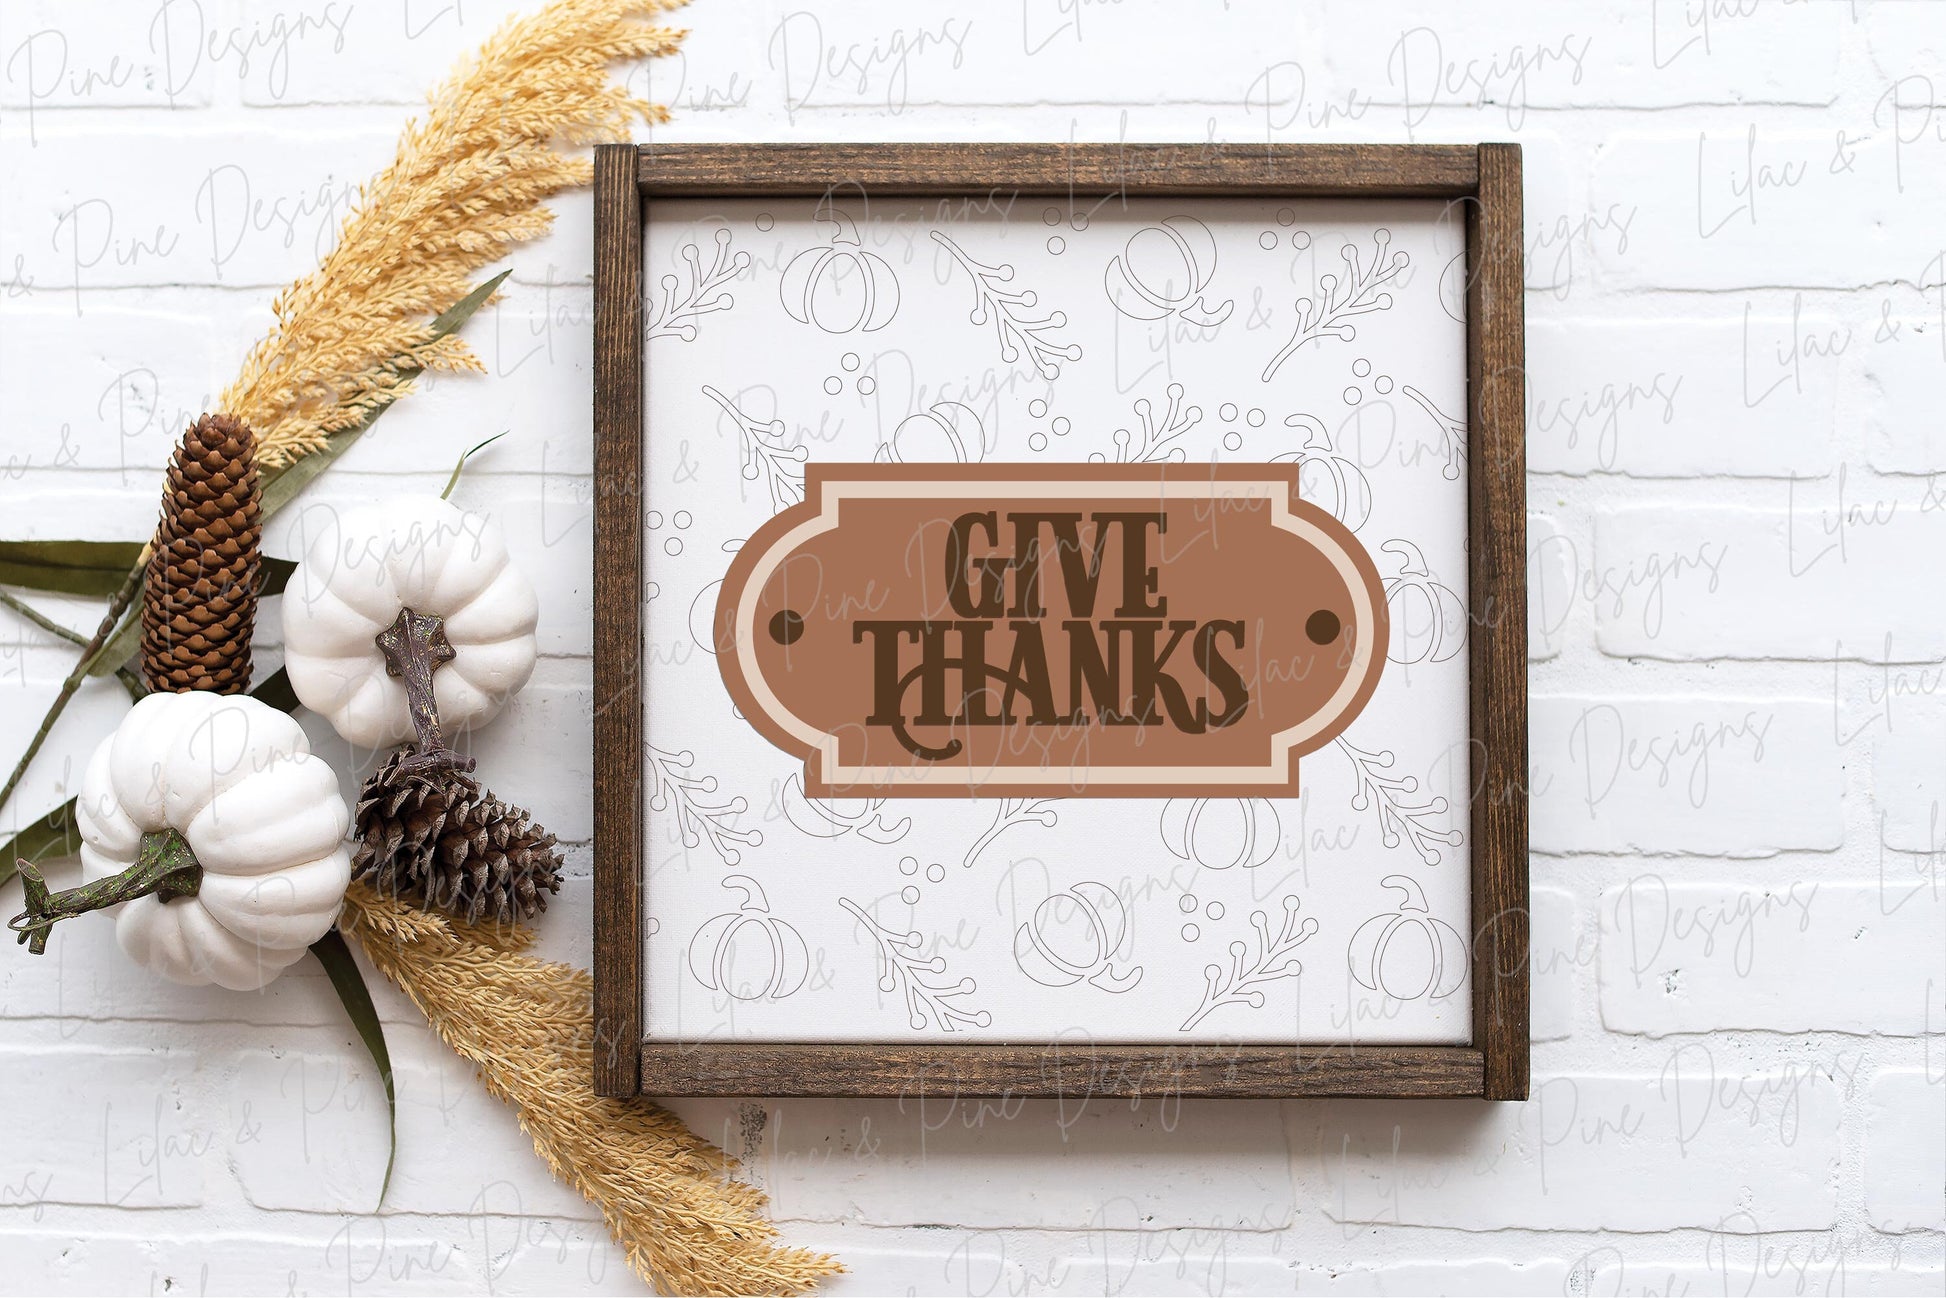 Give Thanks sign SVG, fall sign SVG, pumpkin sign svg, Thanksgiving sign, fall decor, fall farmhouse svg, Glowforge SVG, laser cut file